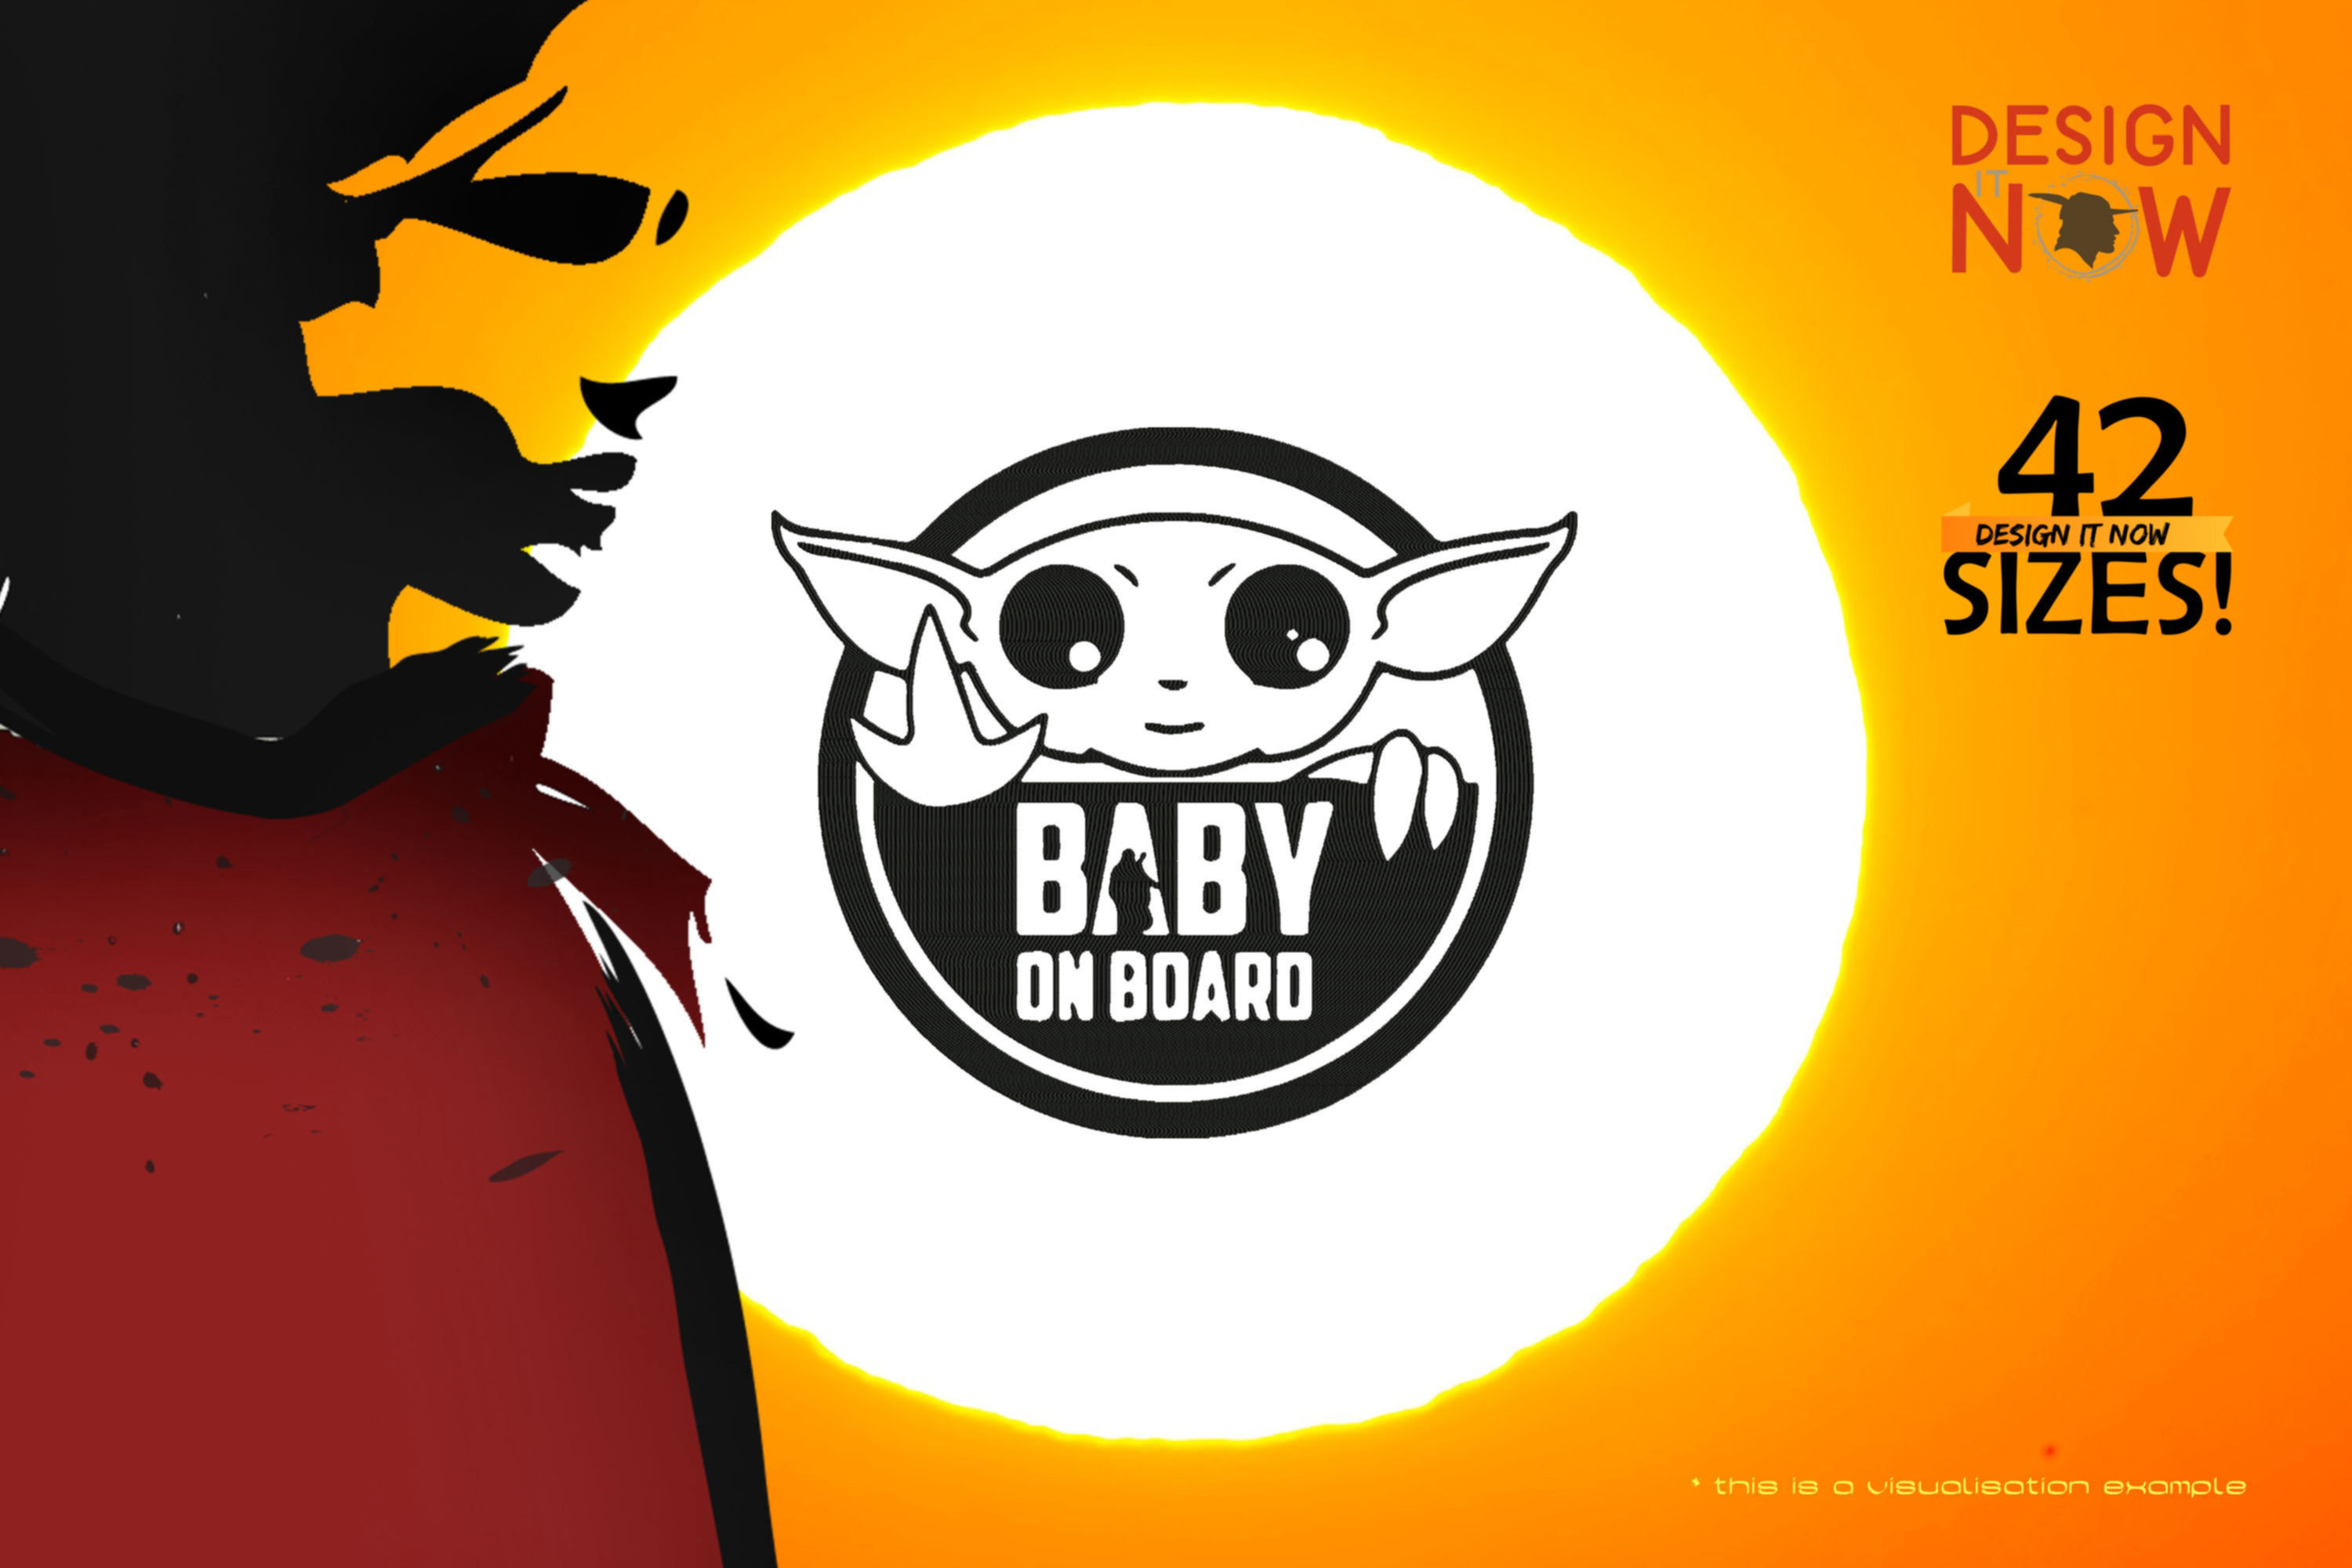 Tribute To Fictional Character Grogu aka Baby Yoda (On Board)